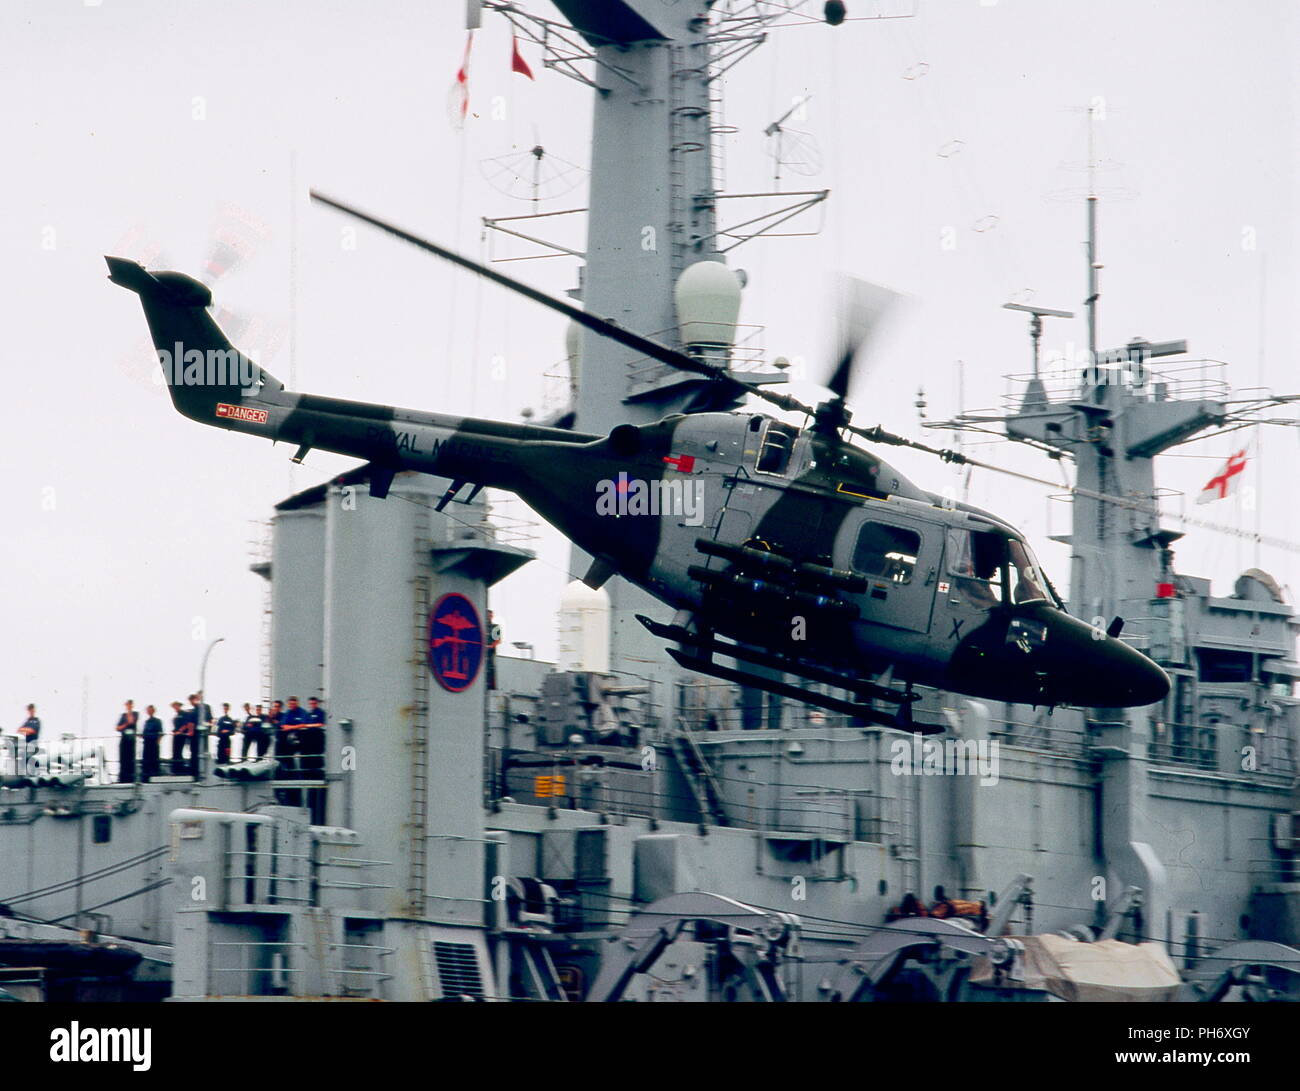 AJAXNETPHOTO. 1992. SOLENT,ENGLAND - AIRBORNE - ROYAL MARINES LYNX FLYING OFF HMS FEARLESS. PHOTO:JONATHAN EASTLAND/AJAX REF:921116217 Stock Photo